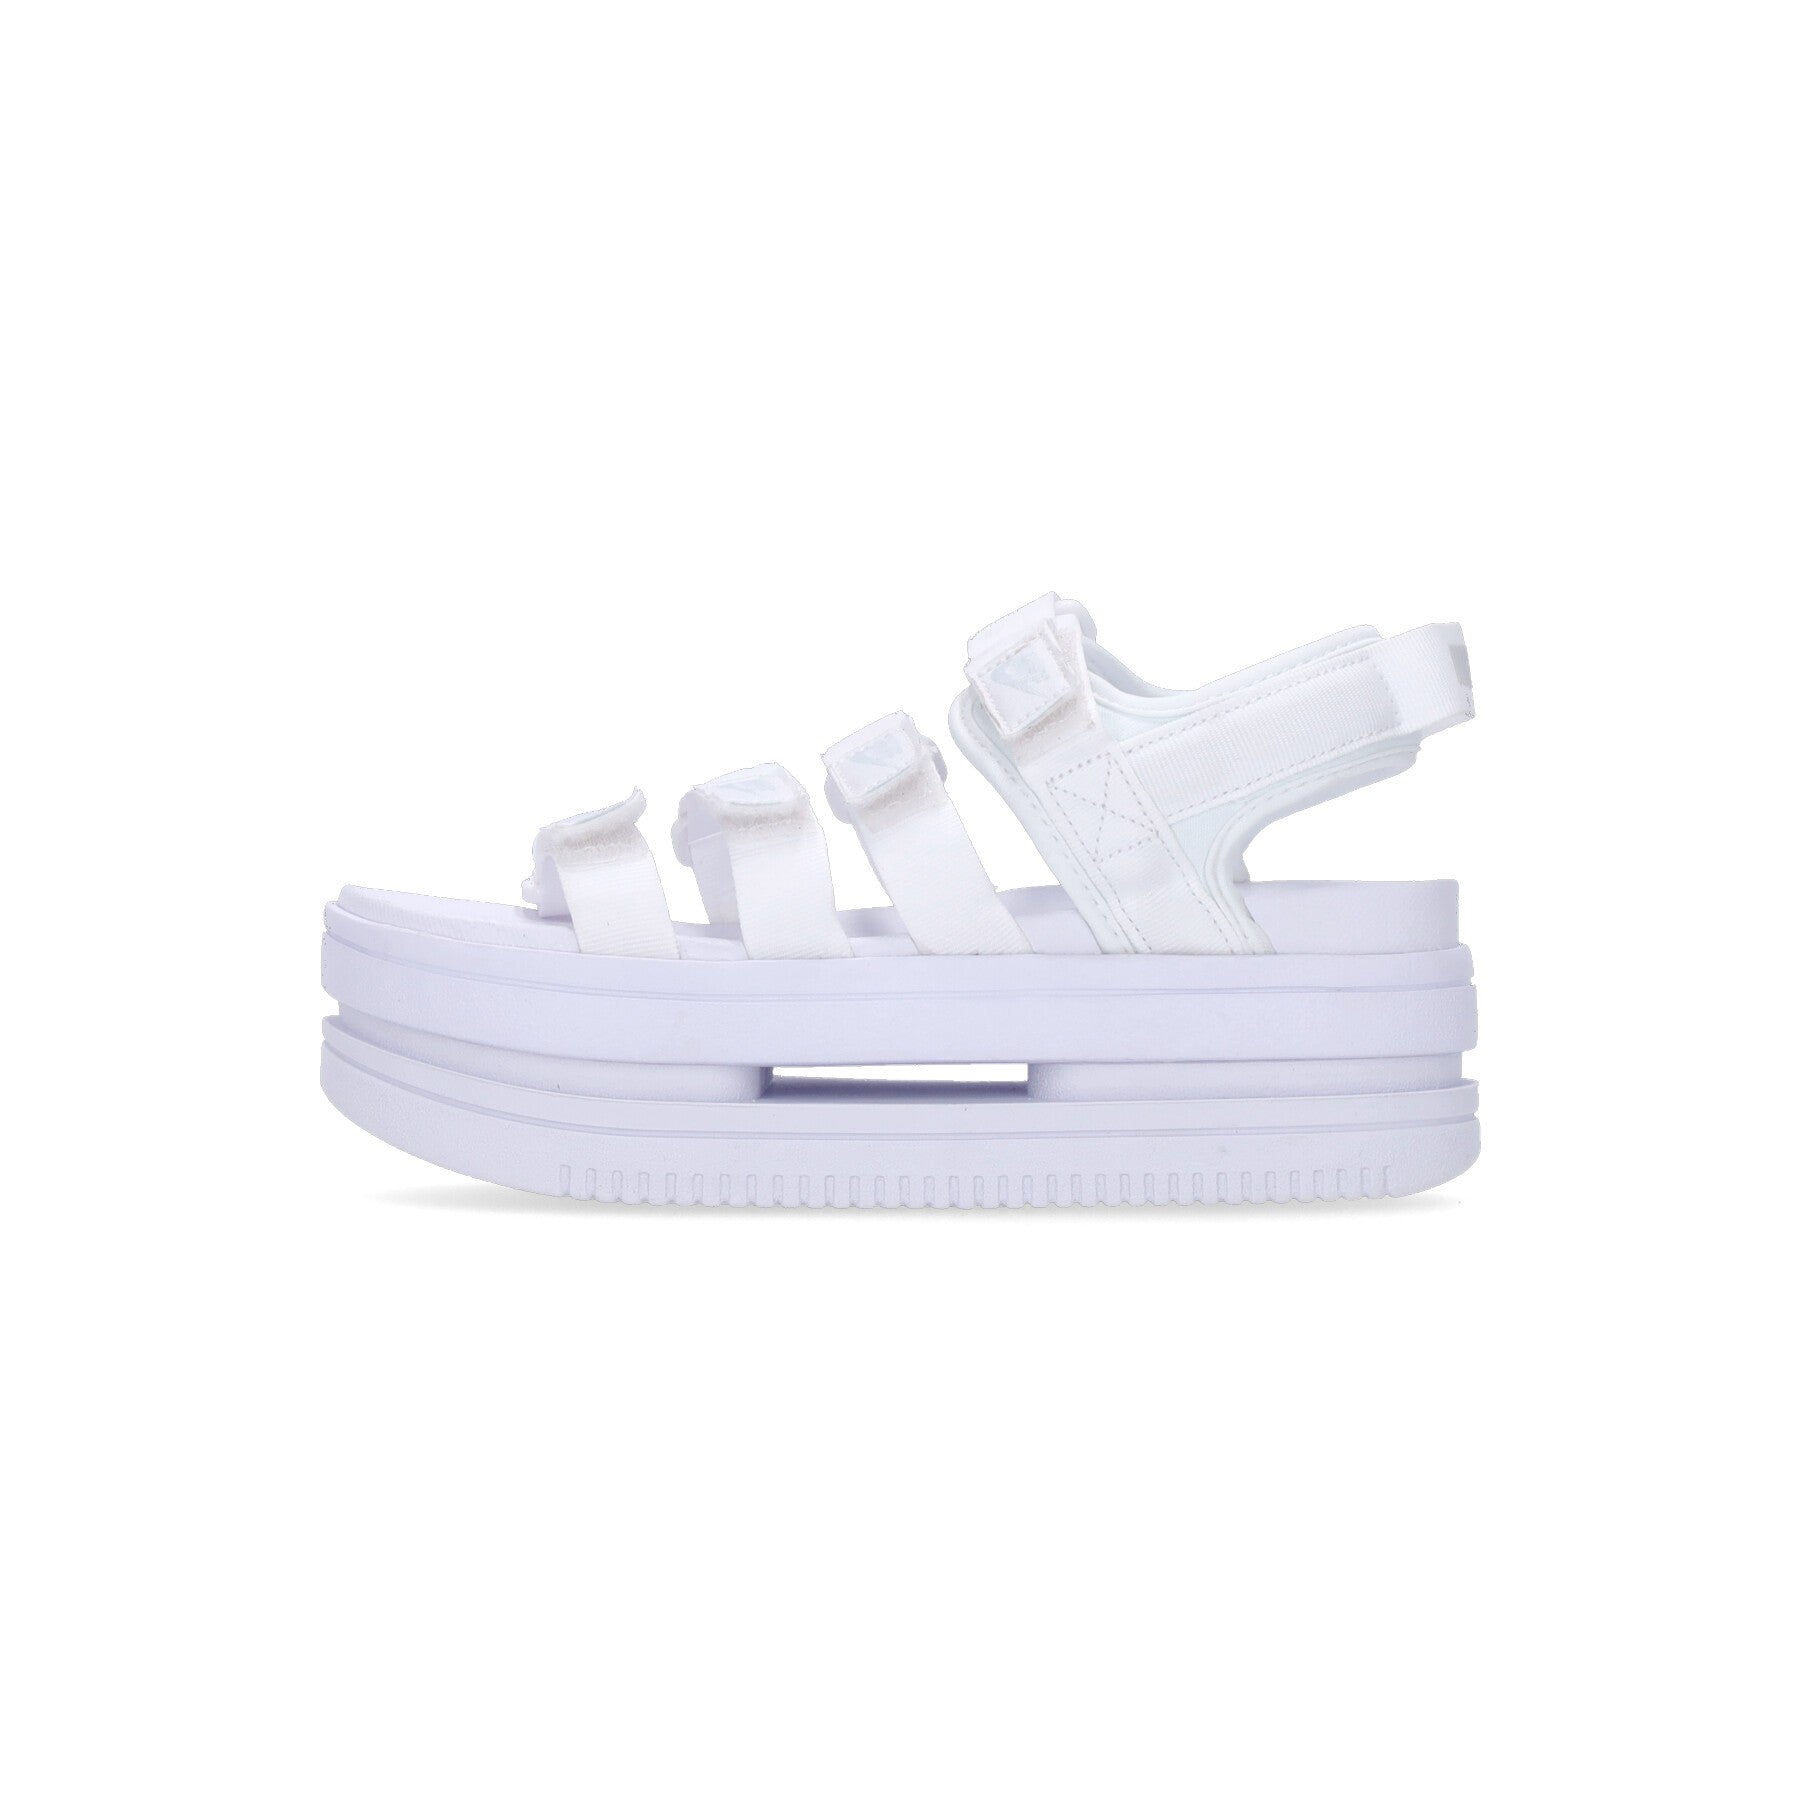 Nike, Sandalo Donna W Icon Classic Sandal, White/pure Platinum/white